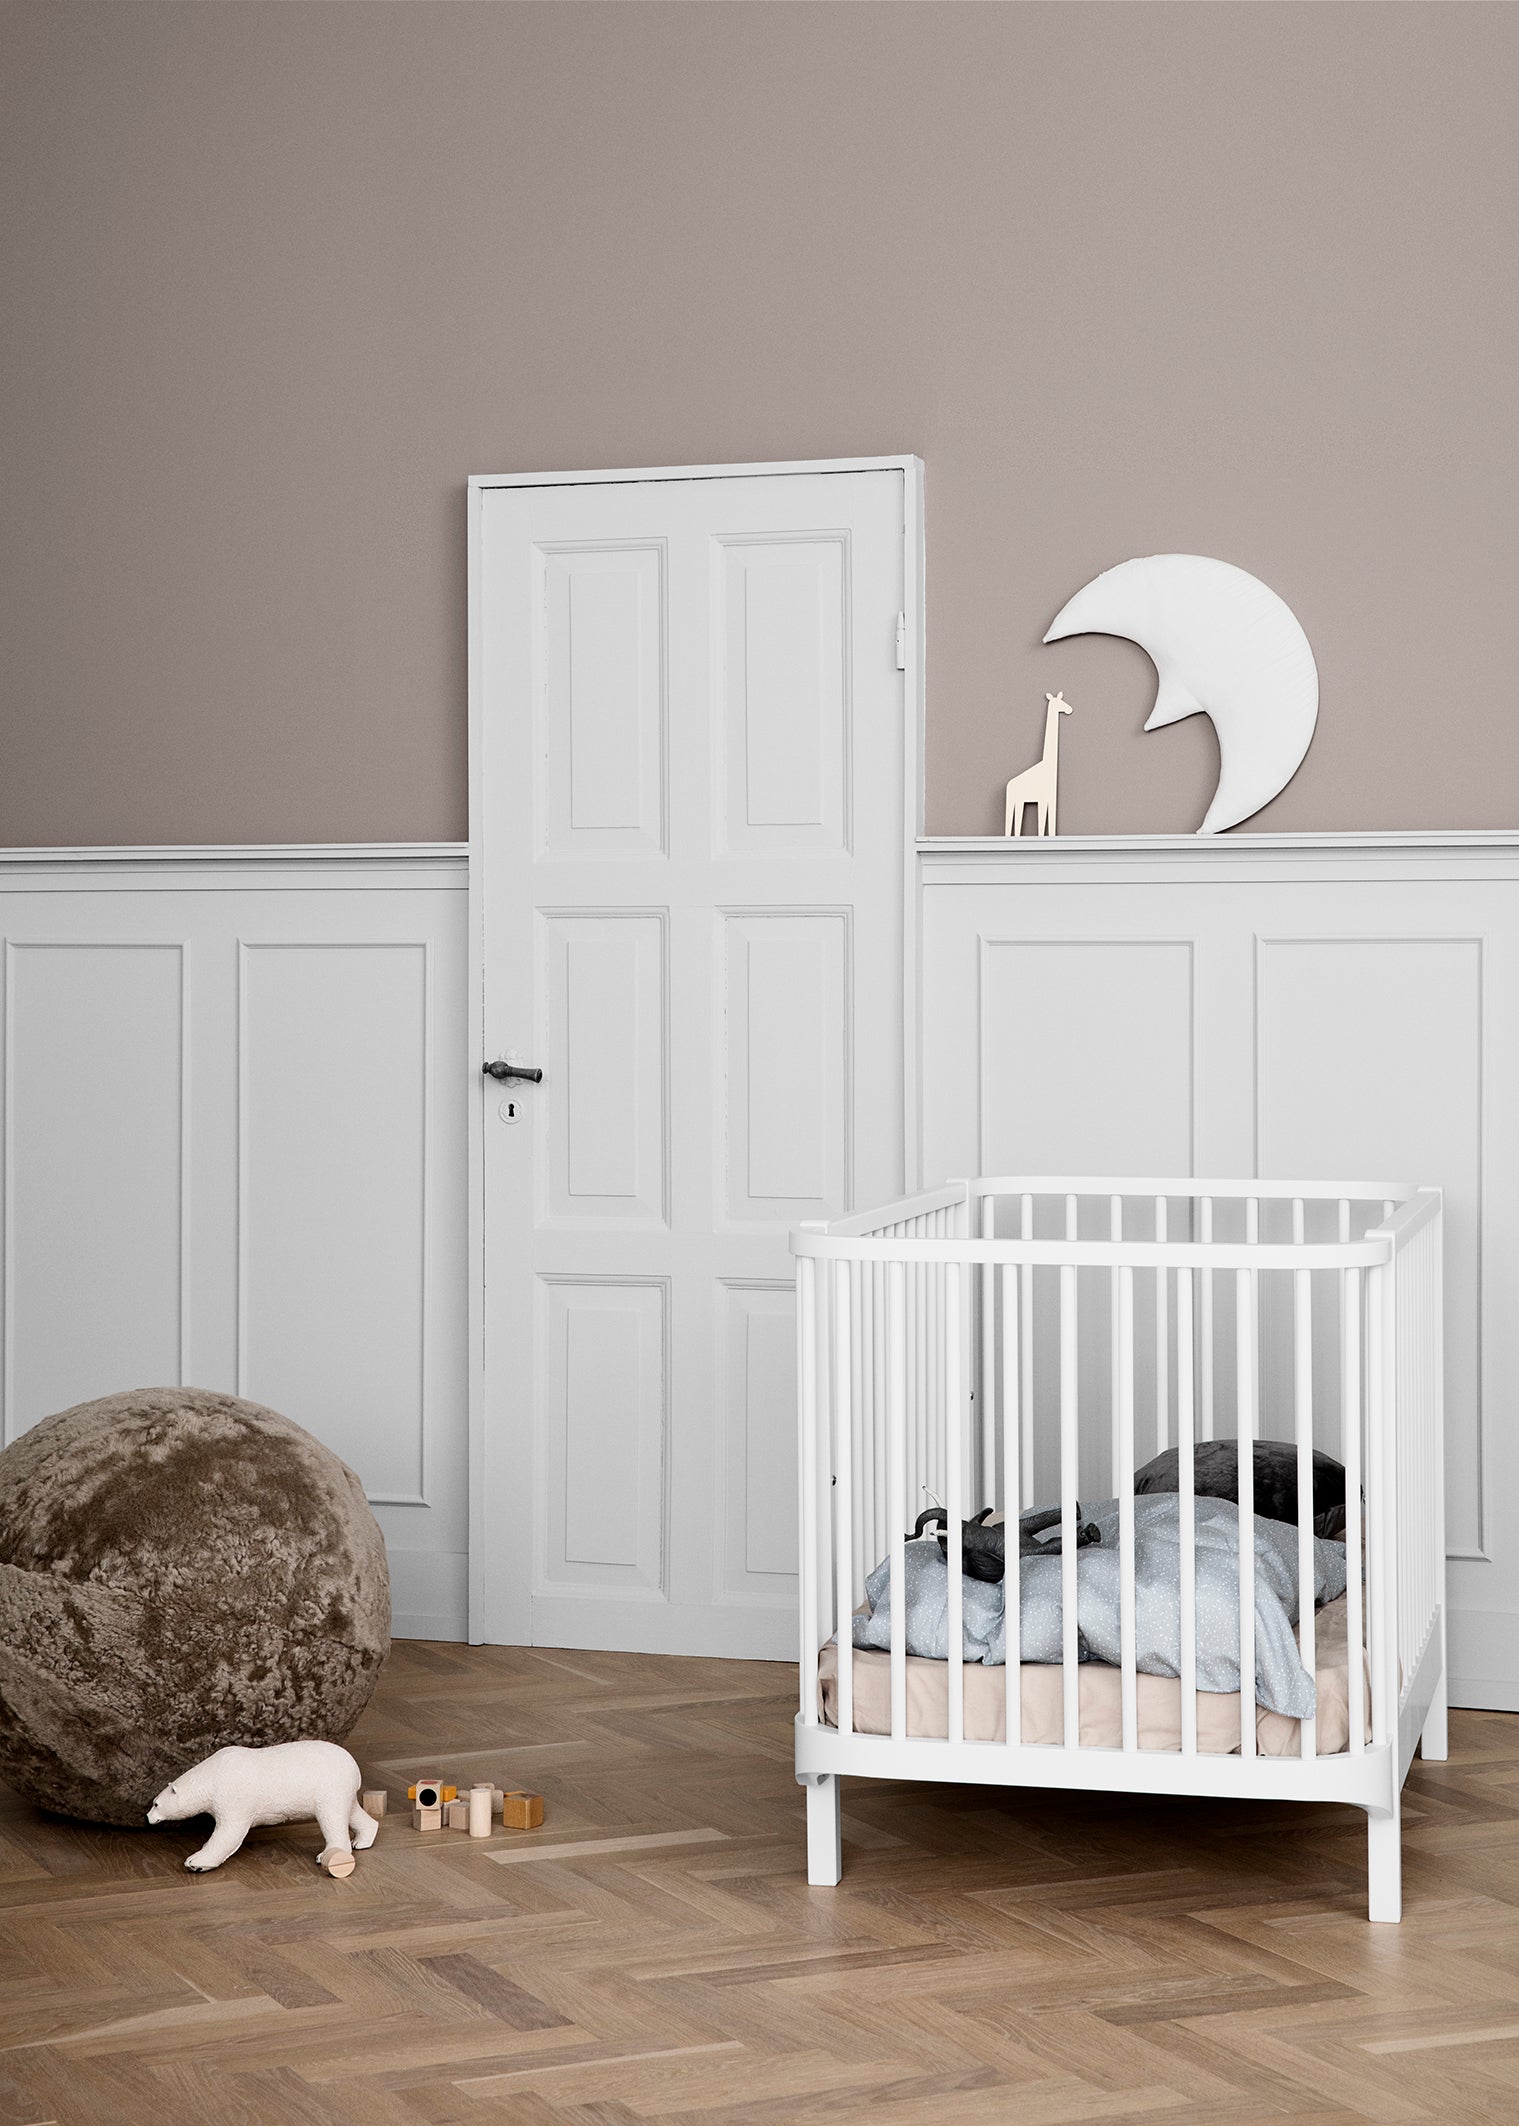 Oliver Furniture Wood baby / children's bed 70 x 140 cm